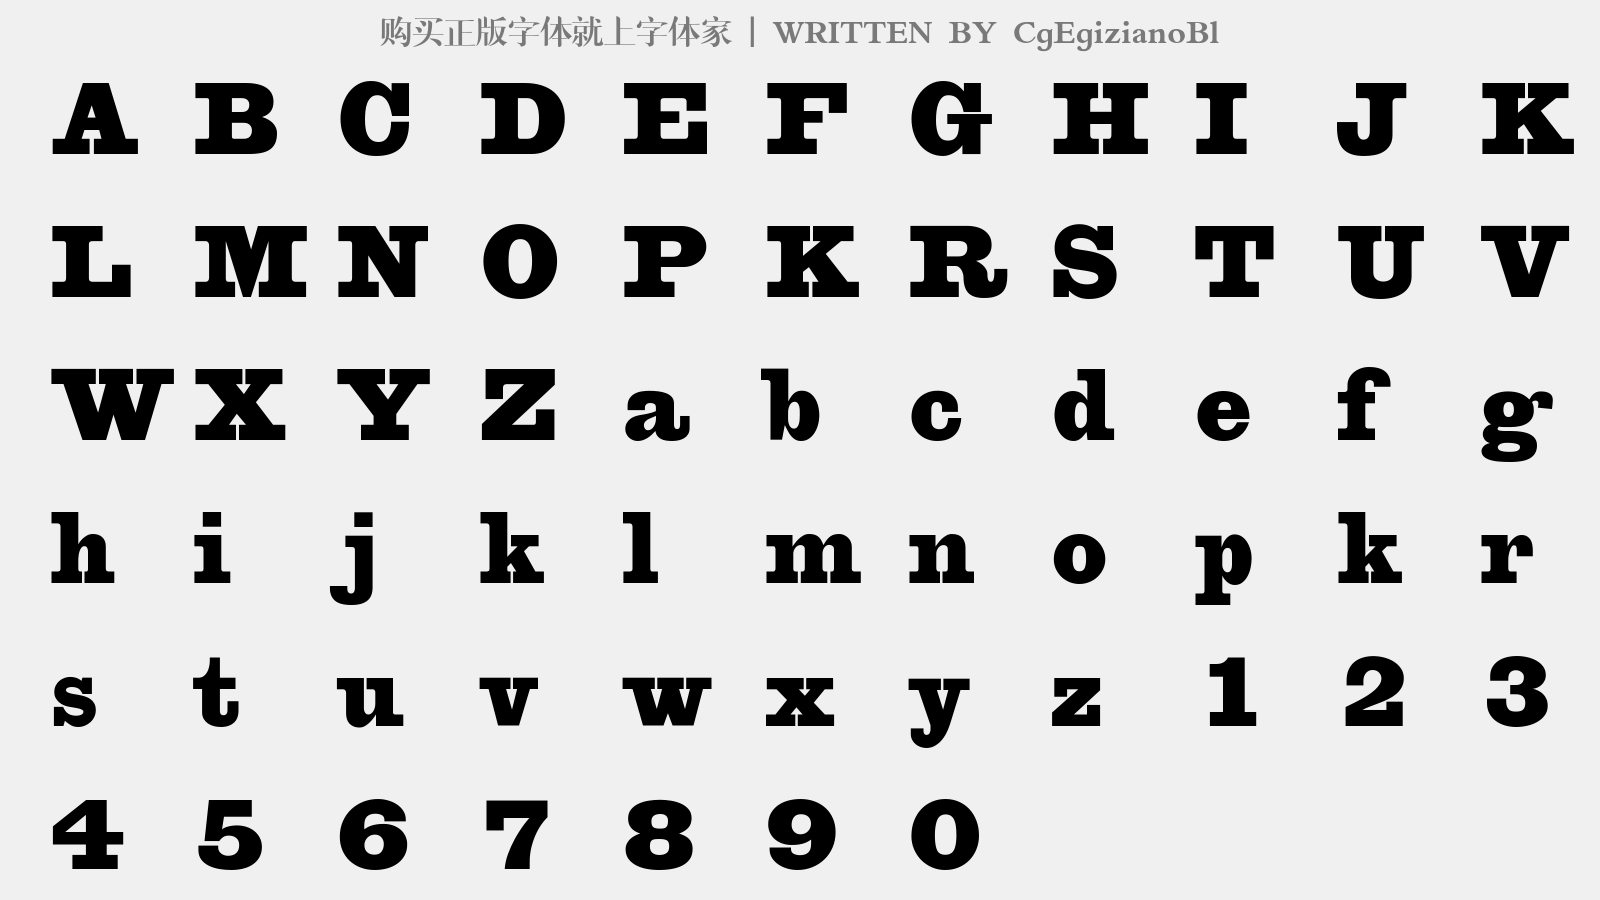 CgEgizianoBl - 大写字母/小写字母/数字